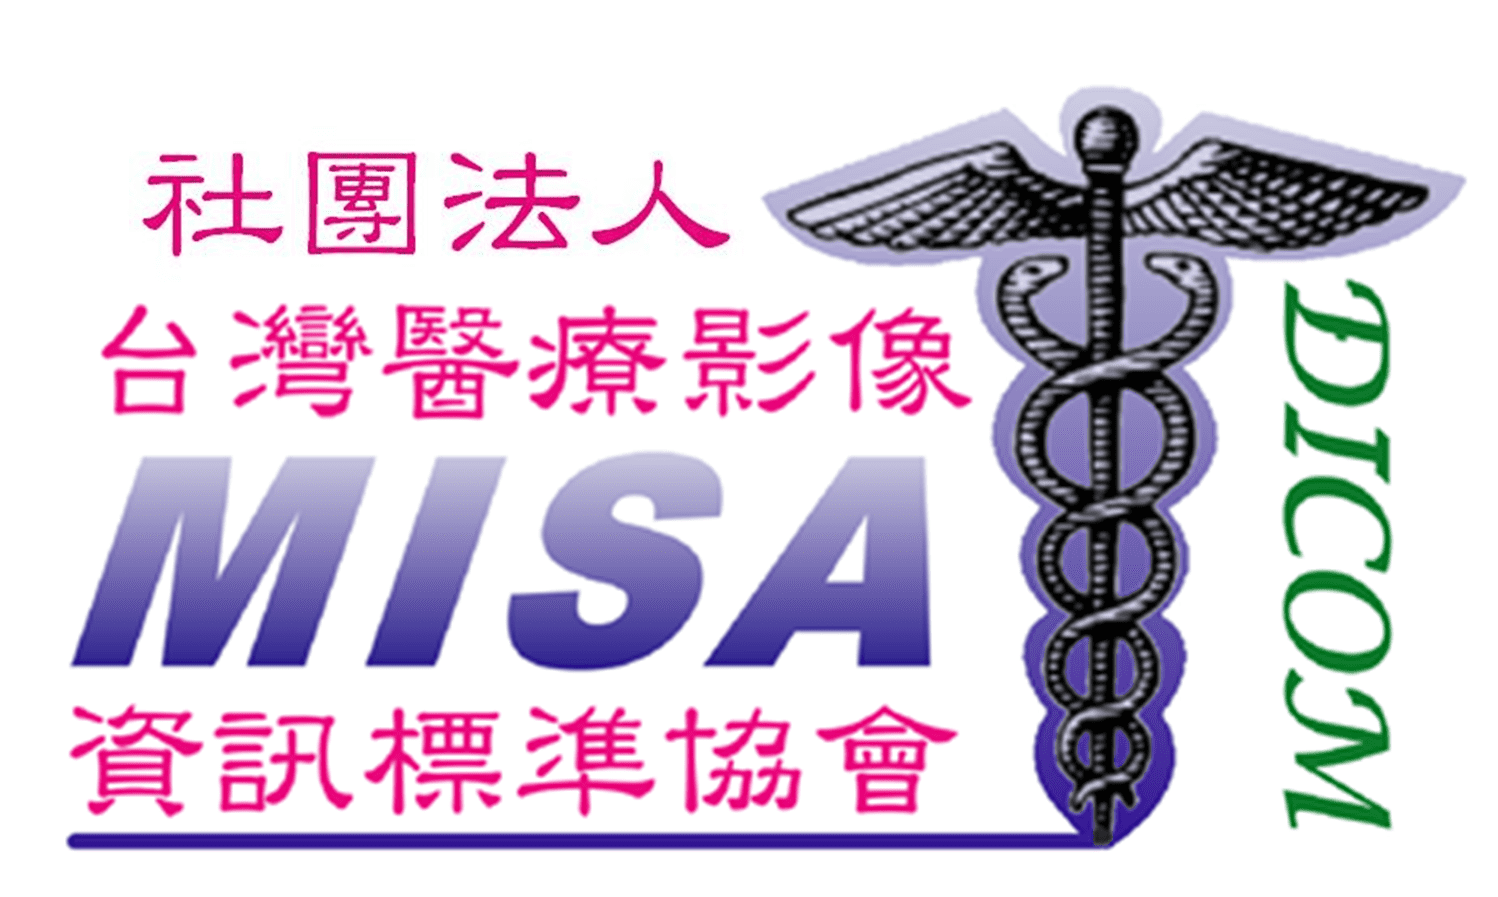 Medical Image Standards Association of Taiwan (MISAT)